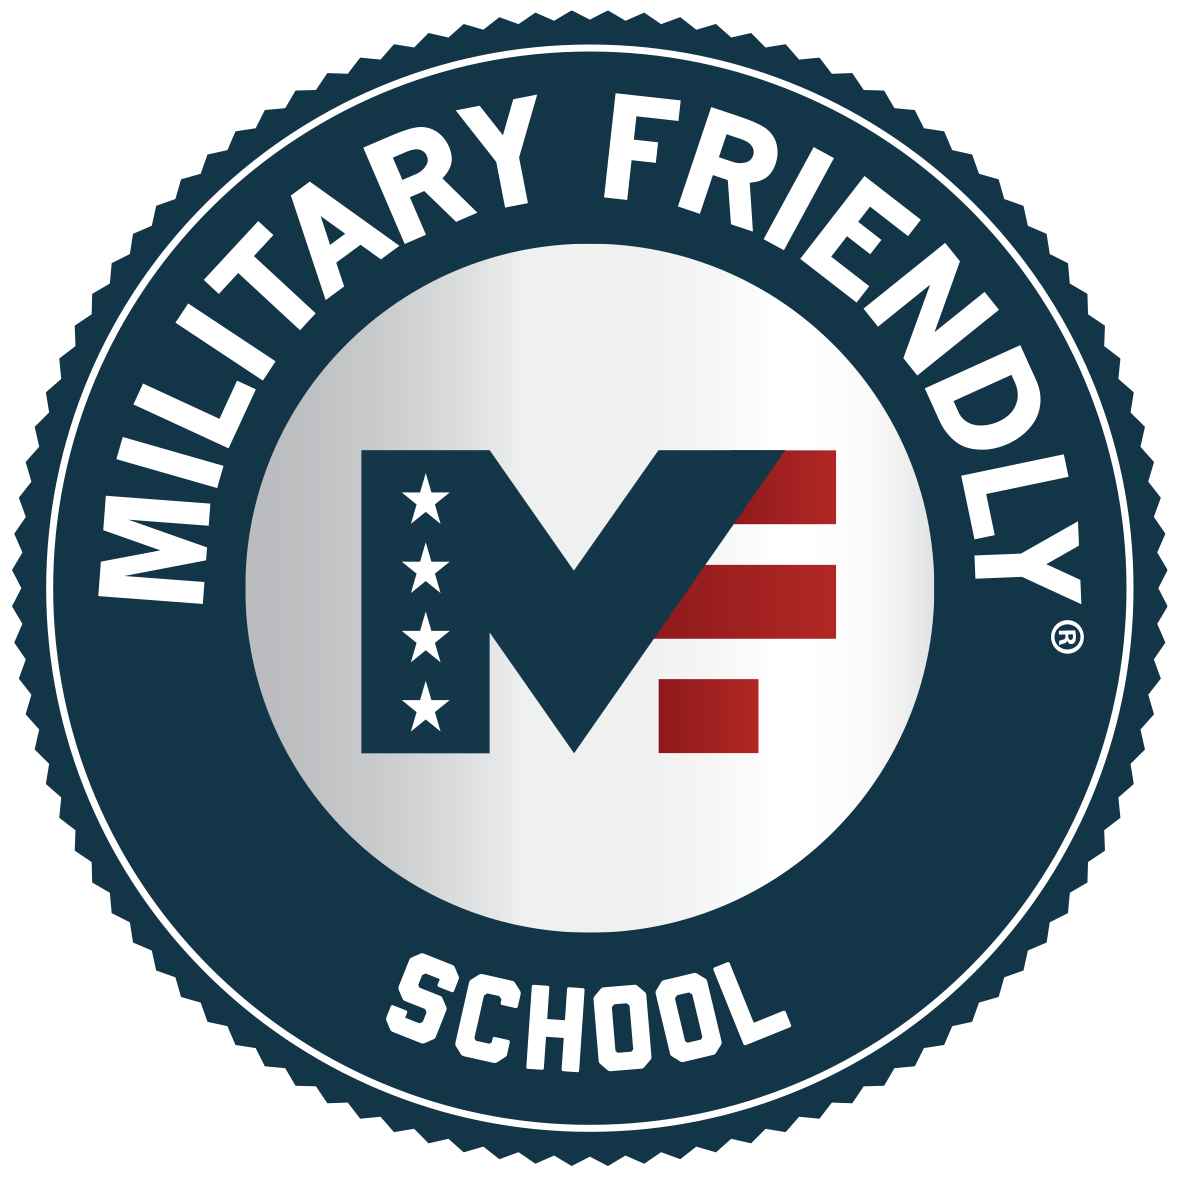 Blue insignia that says "Military friendly school"